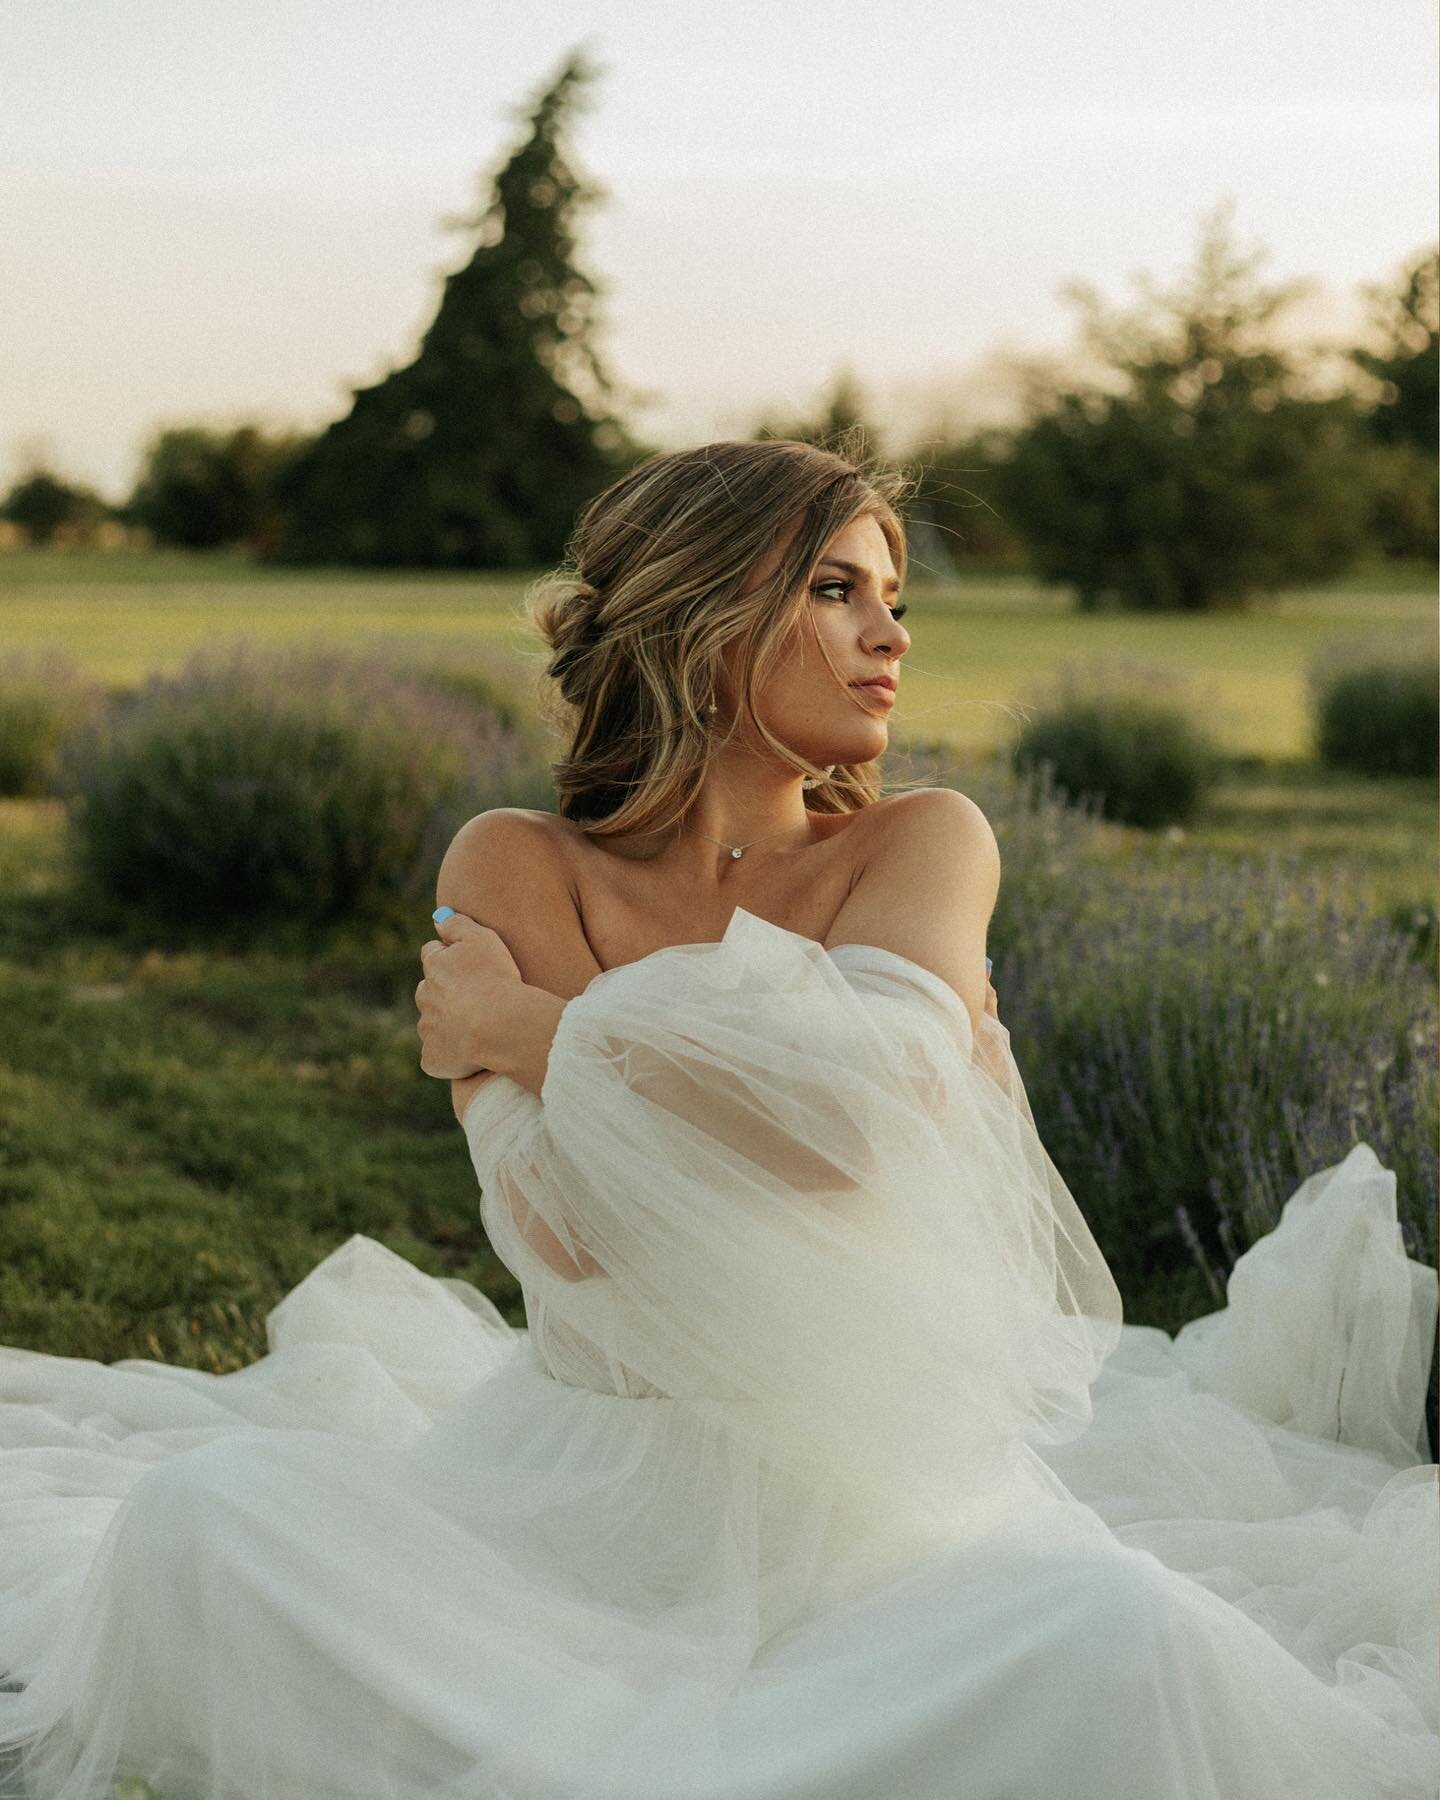 The dreamiest lavender shoot☁️

Gown | @casablancabridal @brooklyncobridal 
Model | @brielynnnn 
Photographer | @ashtonbrunkphoto